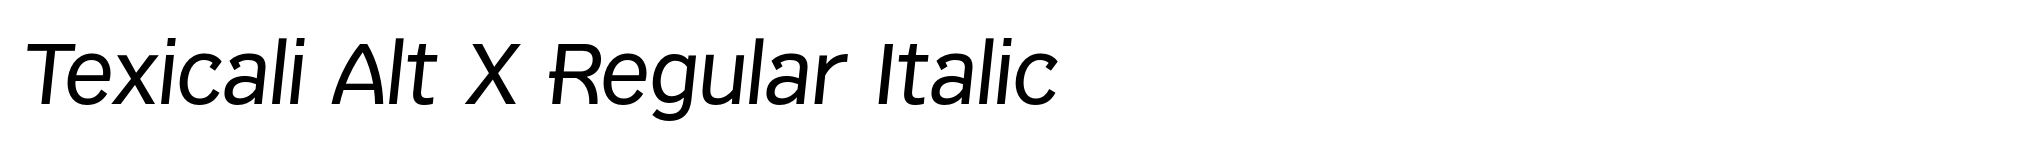 Texicali Alt X Regular Italic image